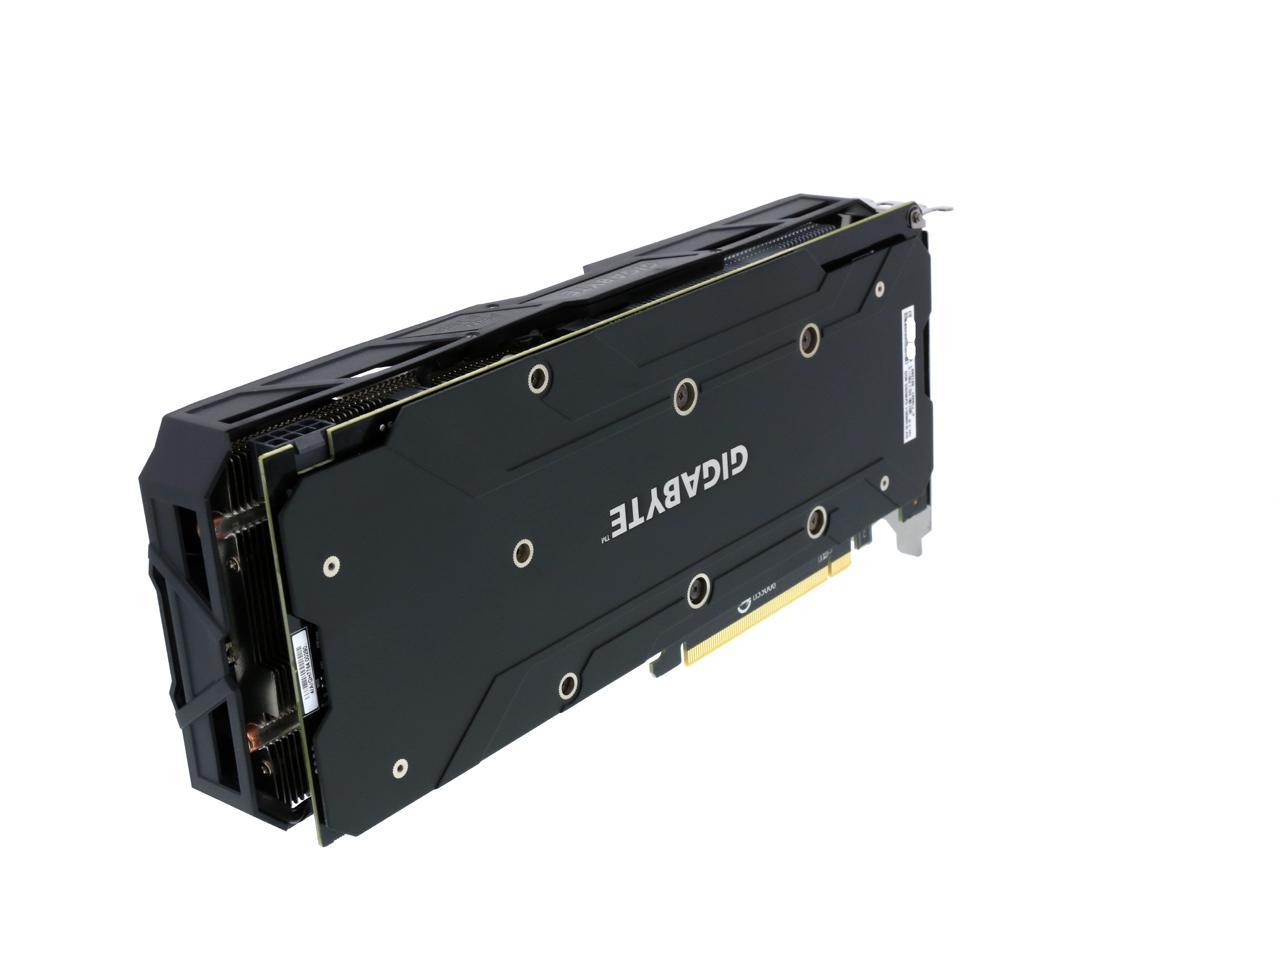 GIGABYTE GeForce GTX 1060 Video Card GV-N1060G1 GAMING-3GD 2.0 